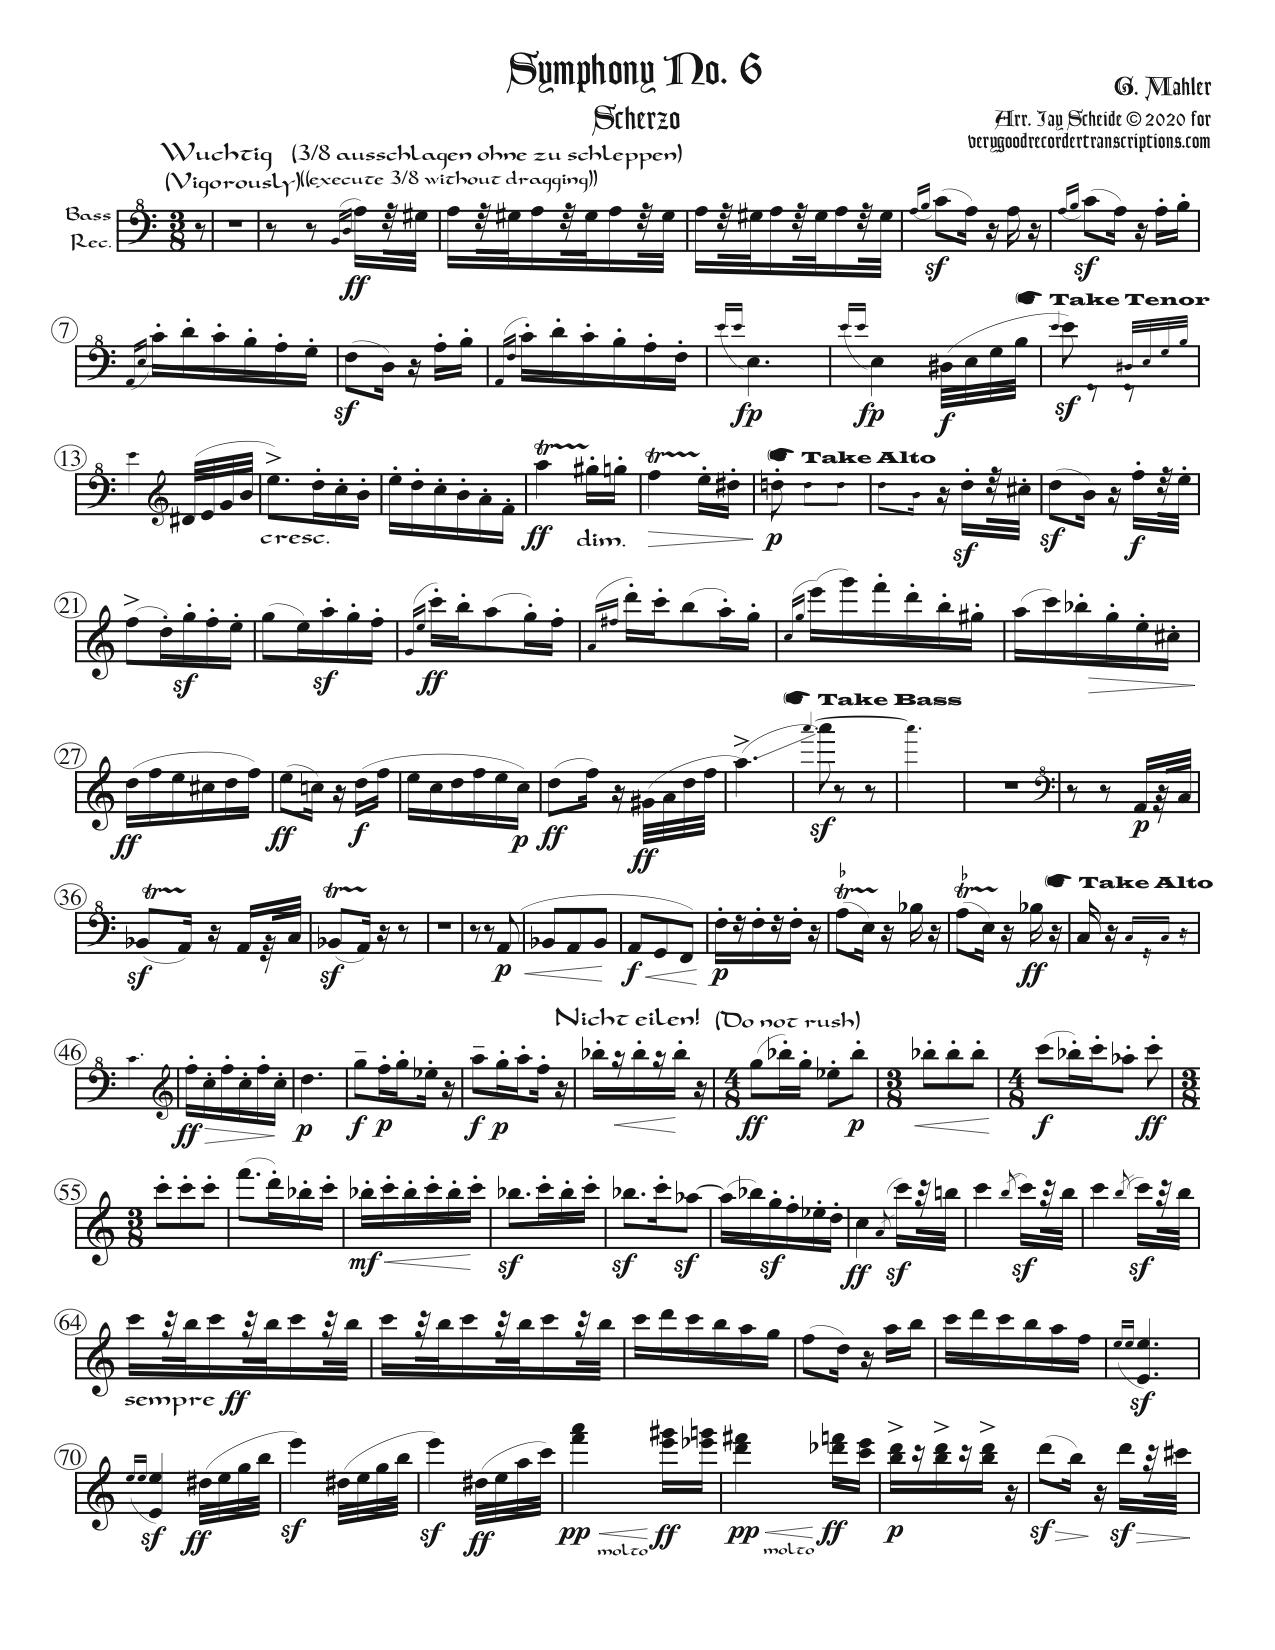 Scherzo from Symphony No. 6